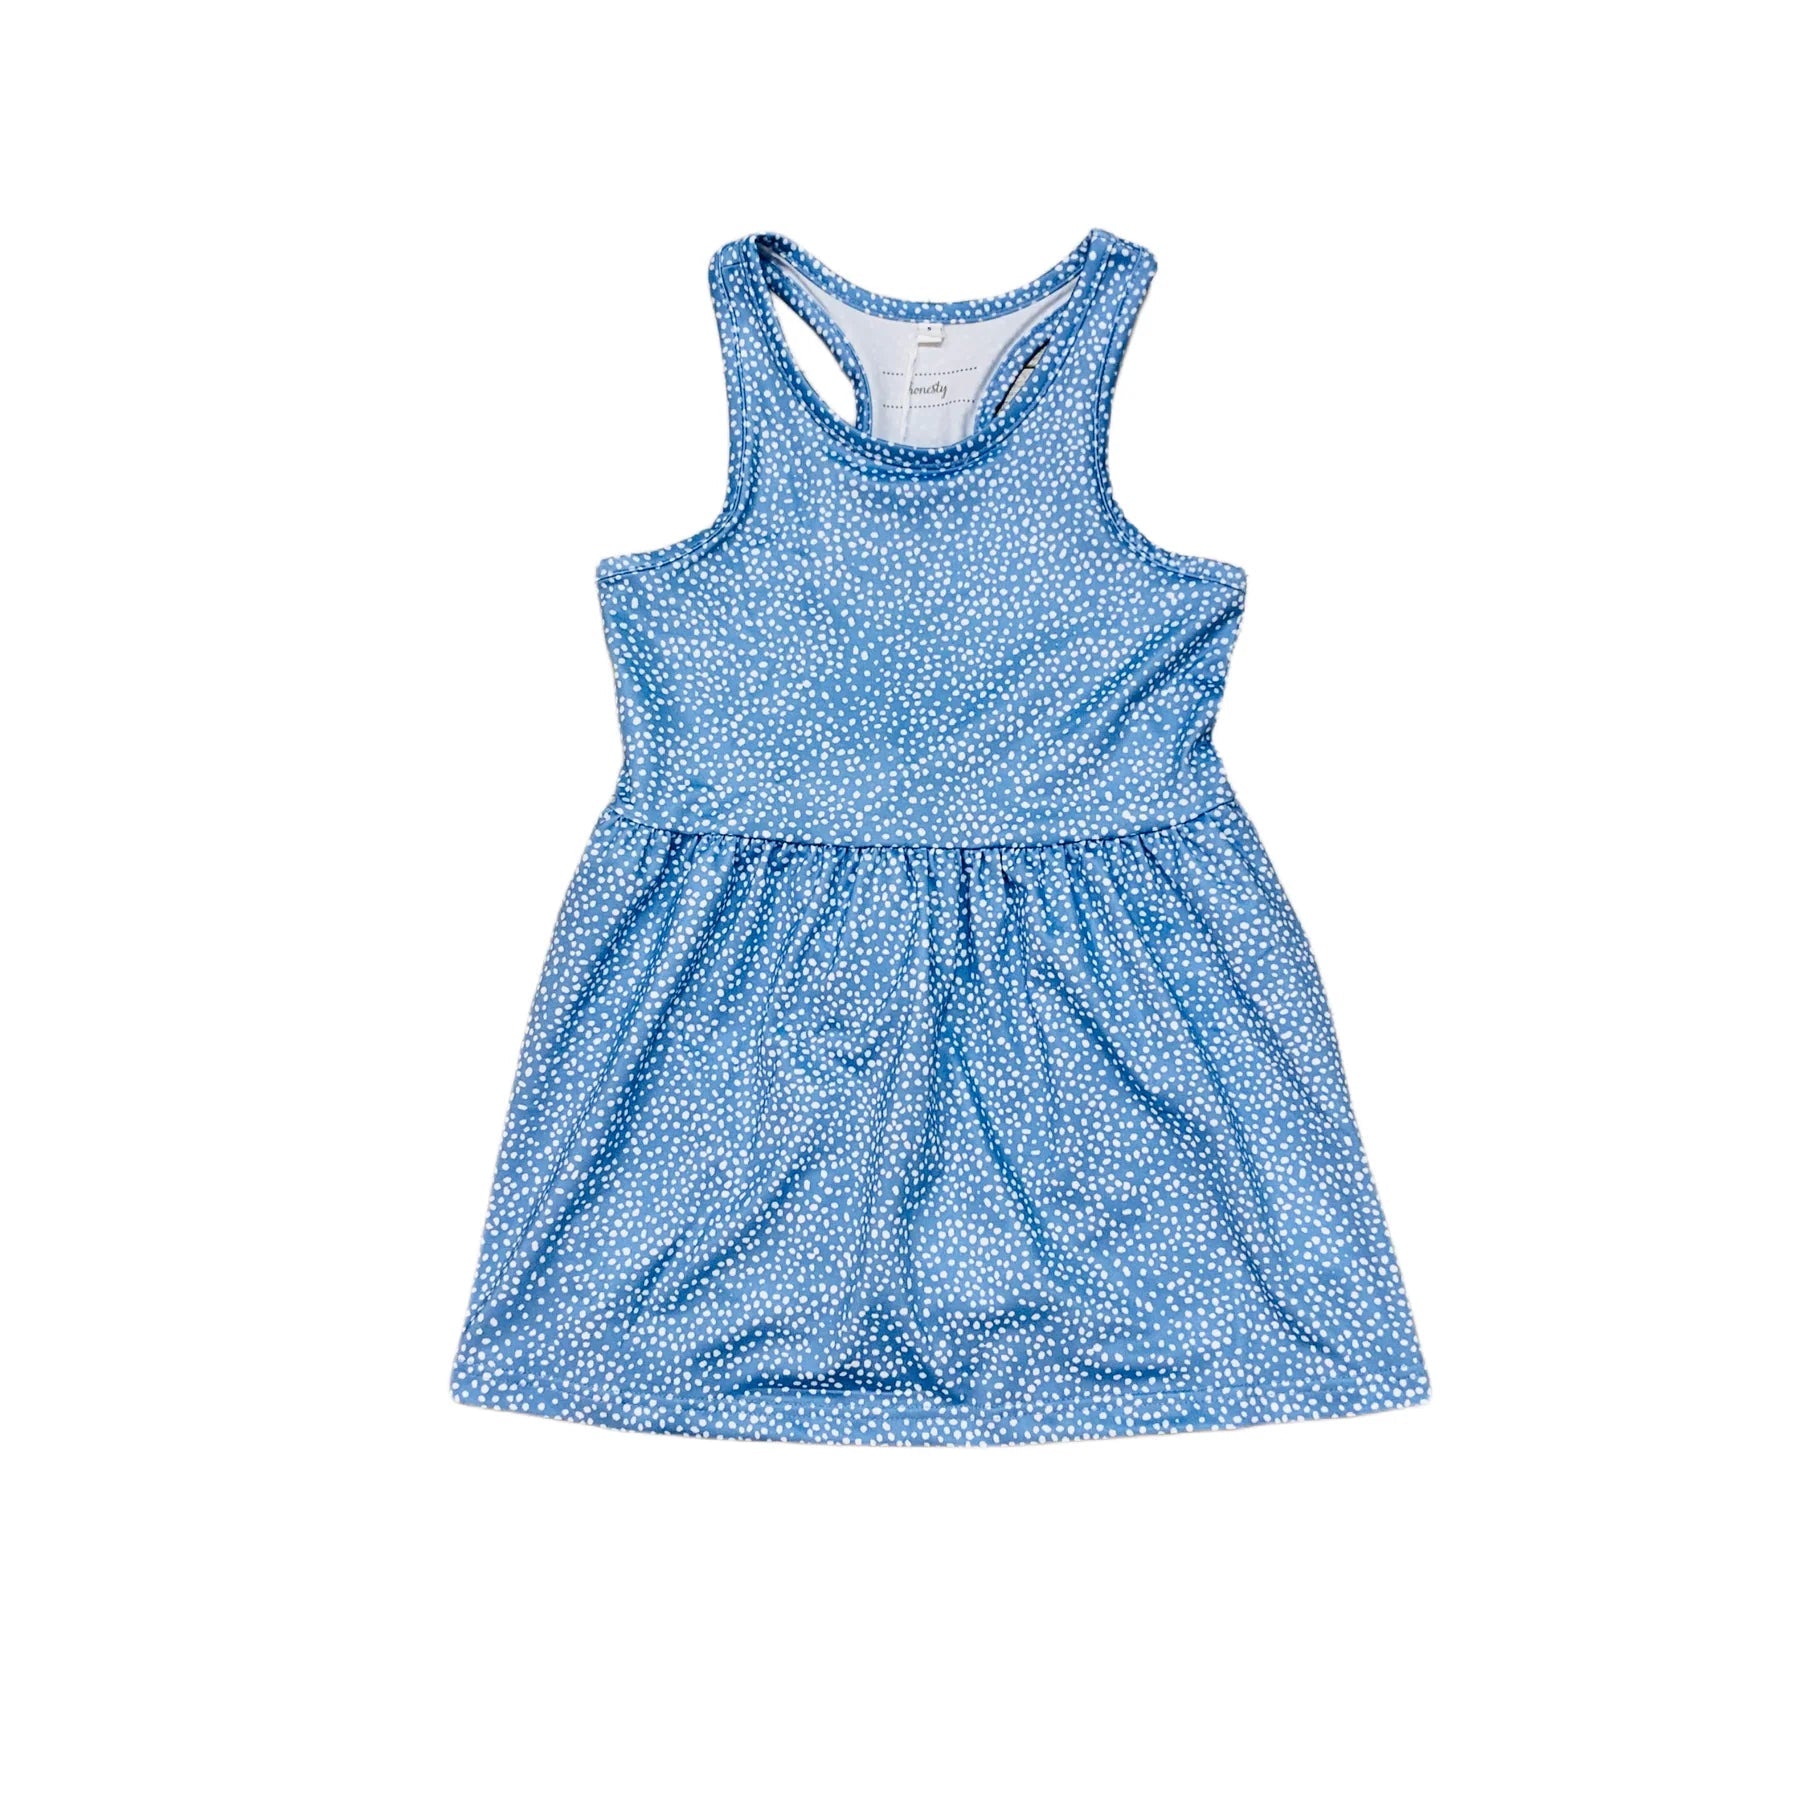 Honesty Clothing Tennis Dress - Powder Blue/White Dots-HONESTY-Little Giant Kidz